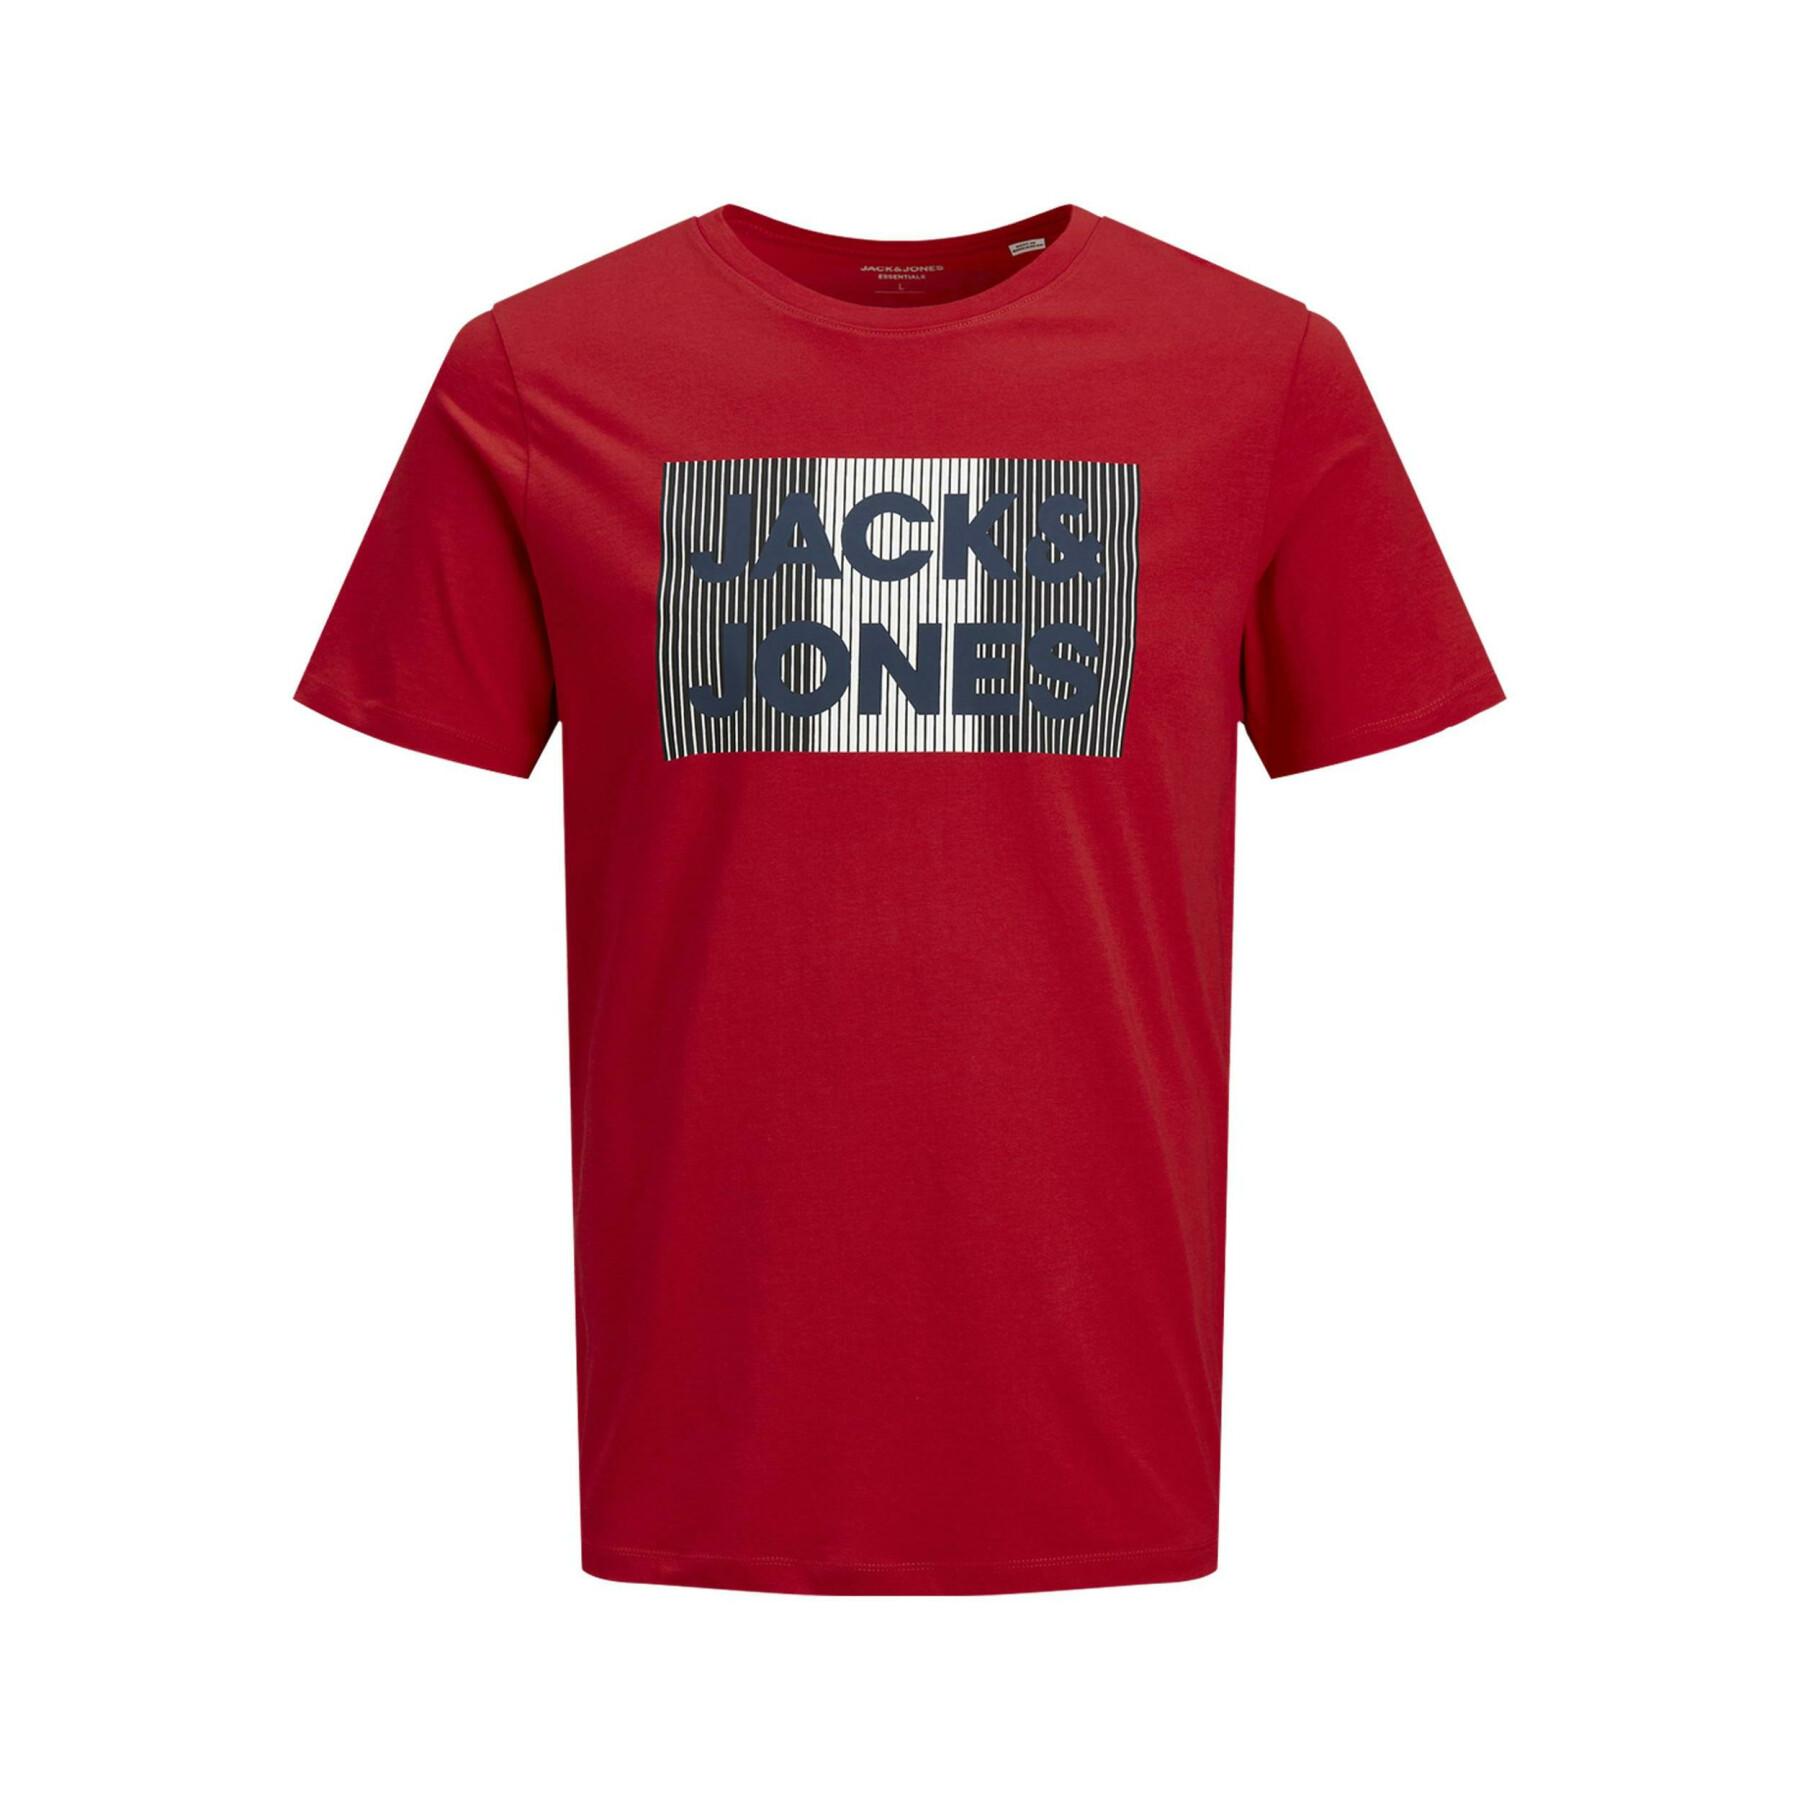 Set of 3 children's t-shirts Jack & Jones corp logo